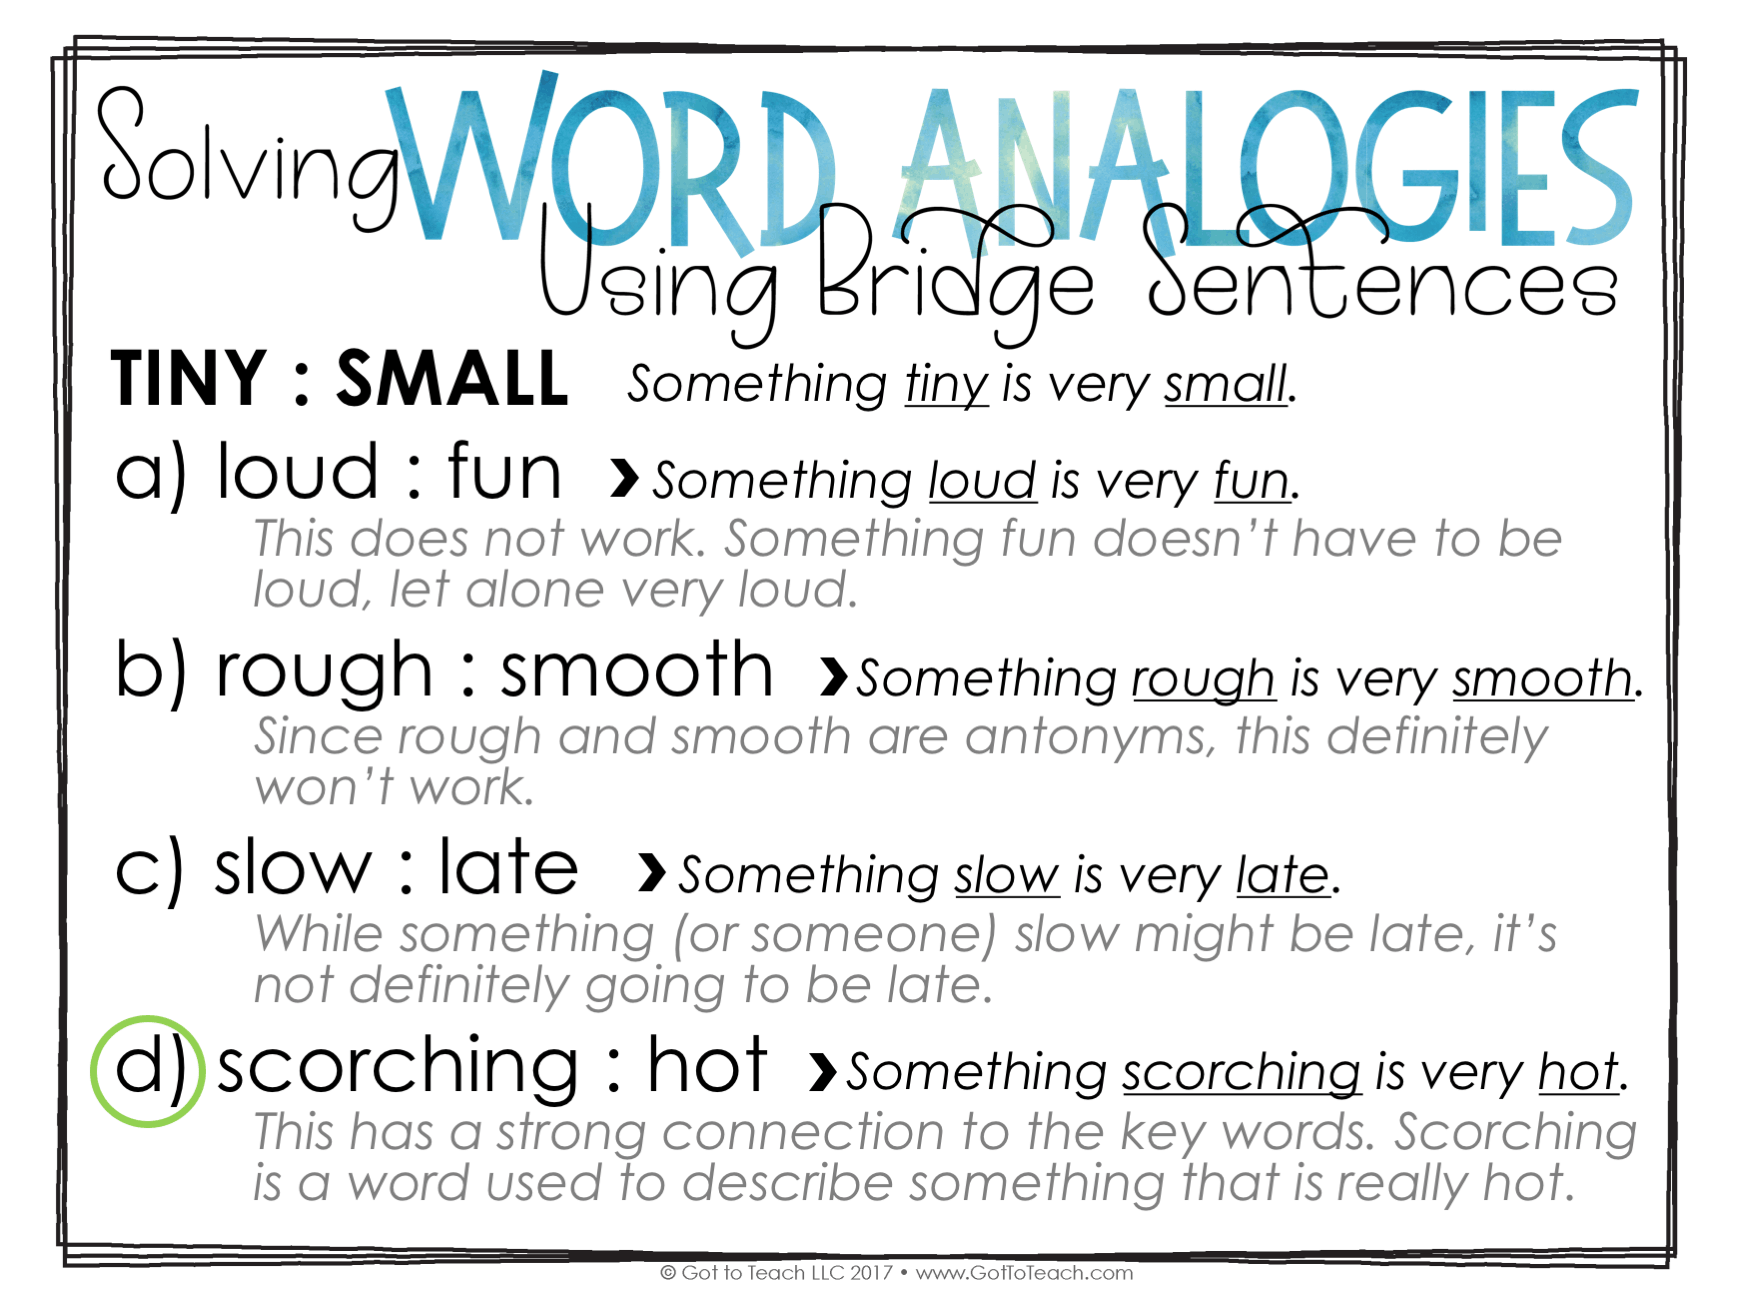 build-vocabulary-with-word-analogies-teacher-thrive